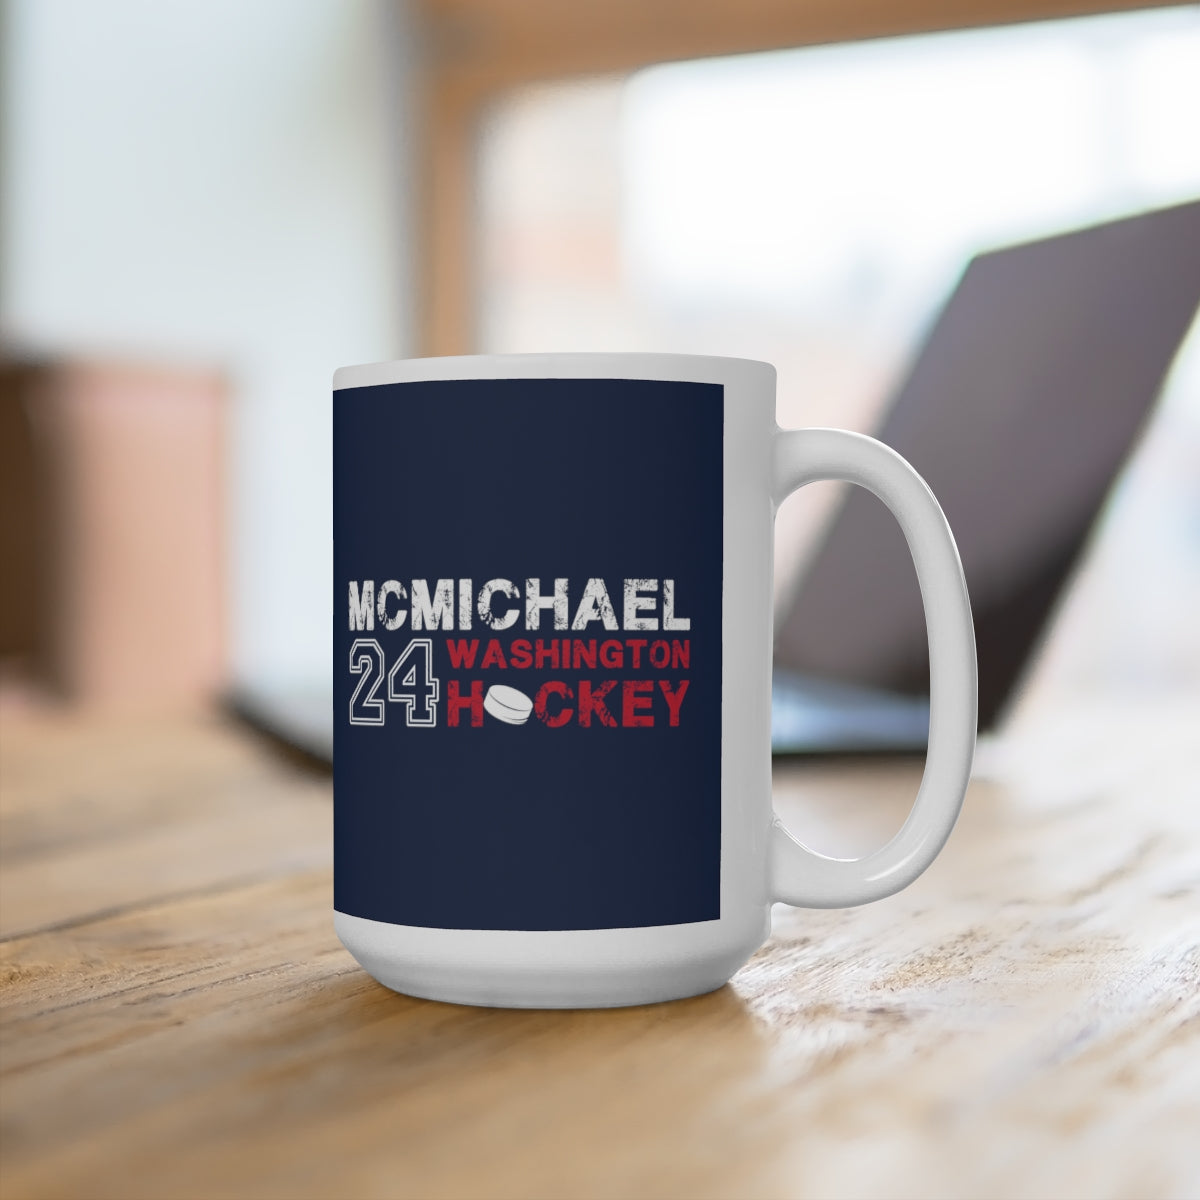 McMichael 24 Washington Hockey Ceramic Coffee Mug In Navy, 15oz